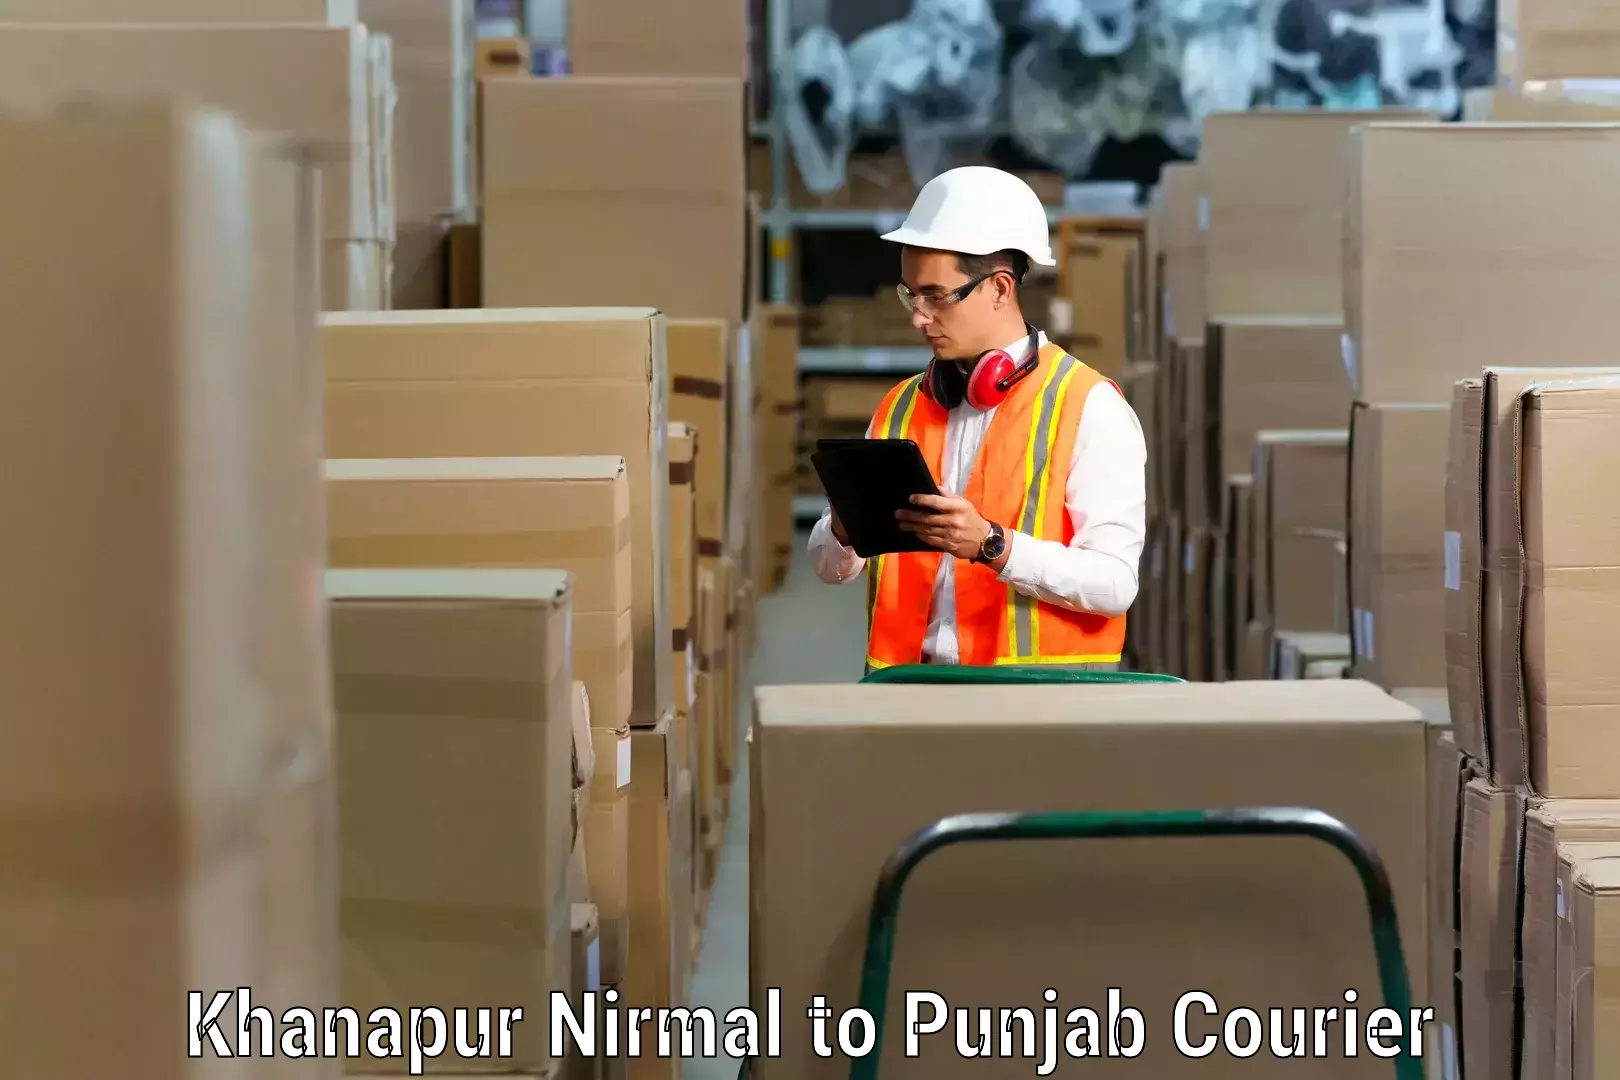 Professional moving company Khanapur Nirmal to Kapurthala